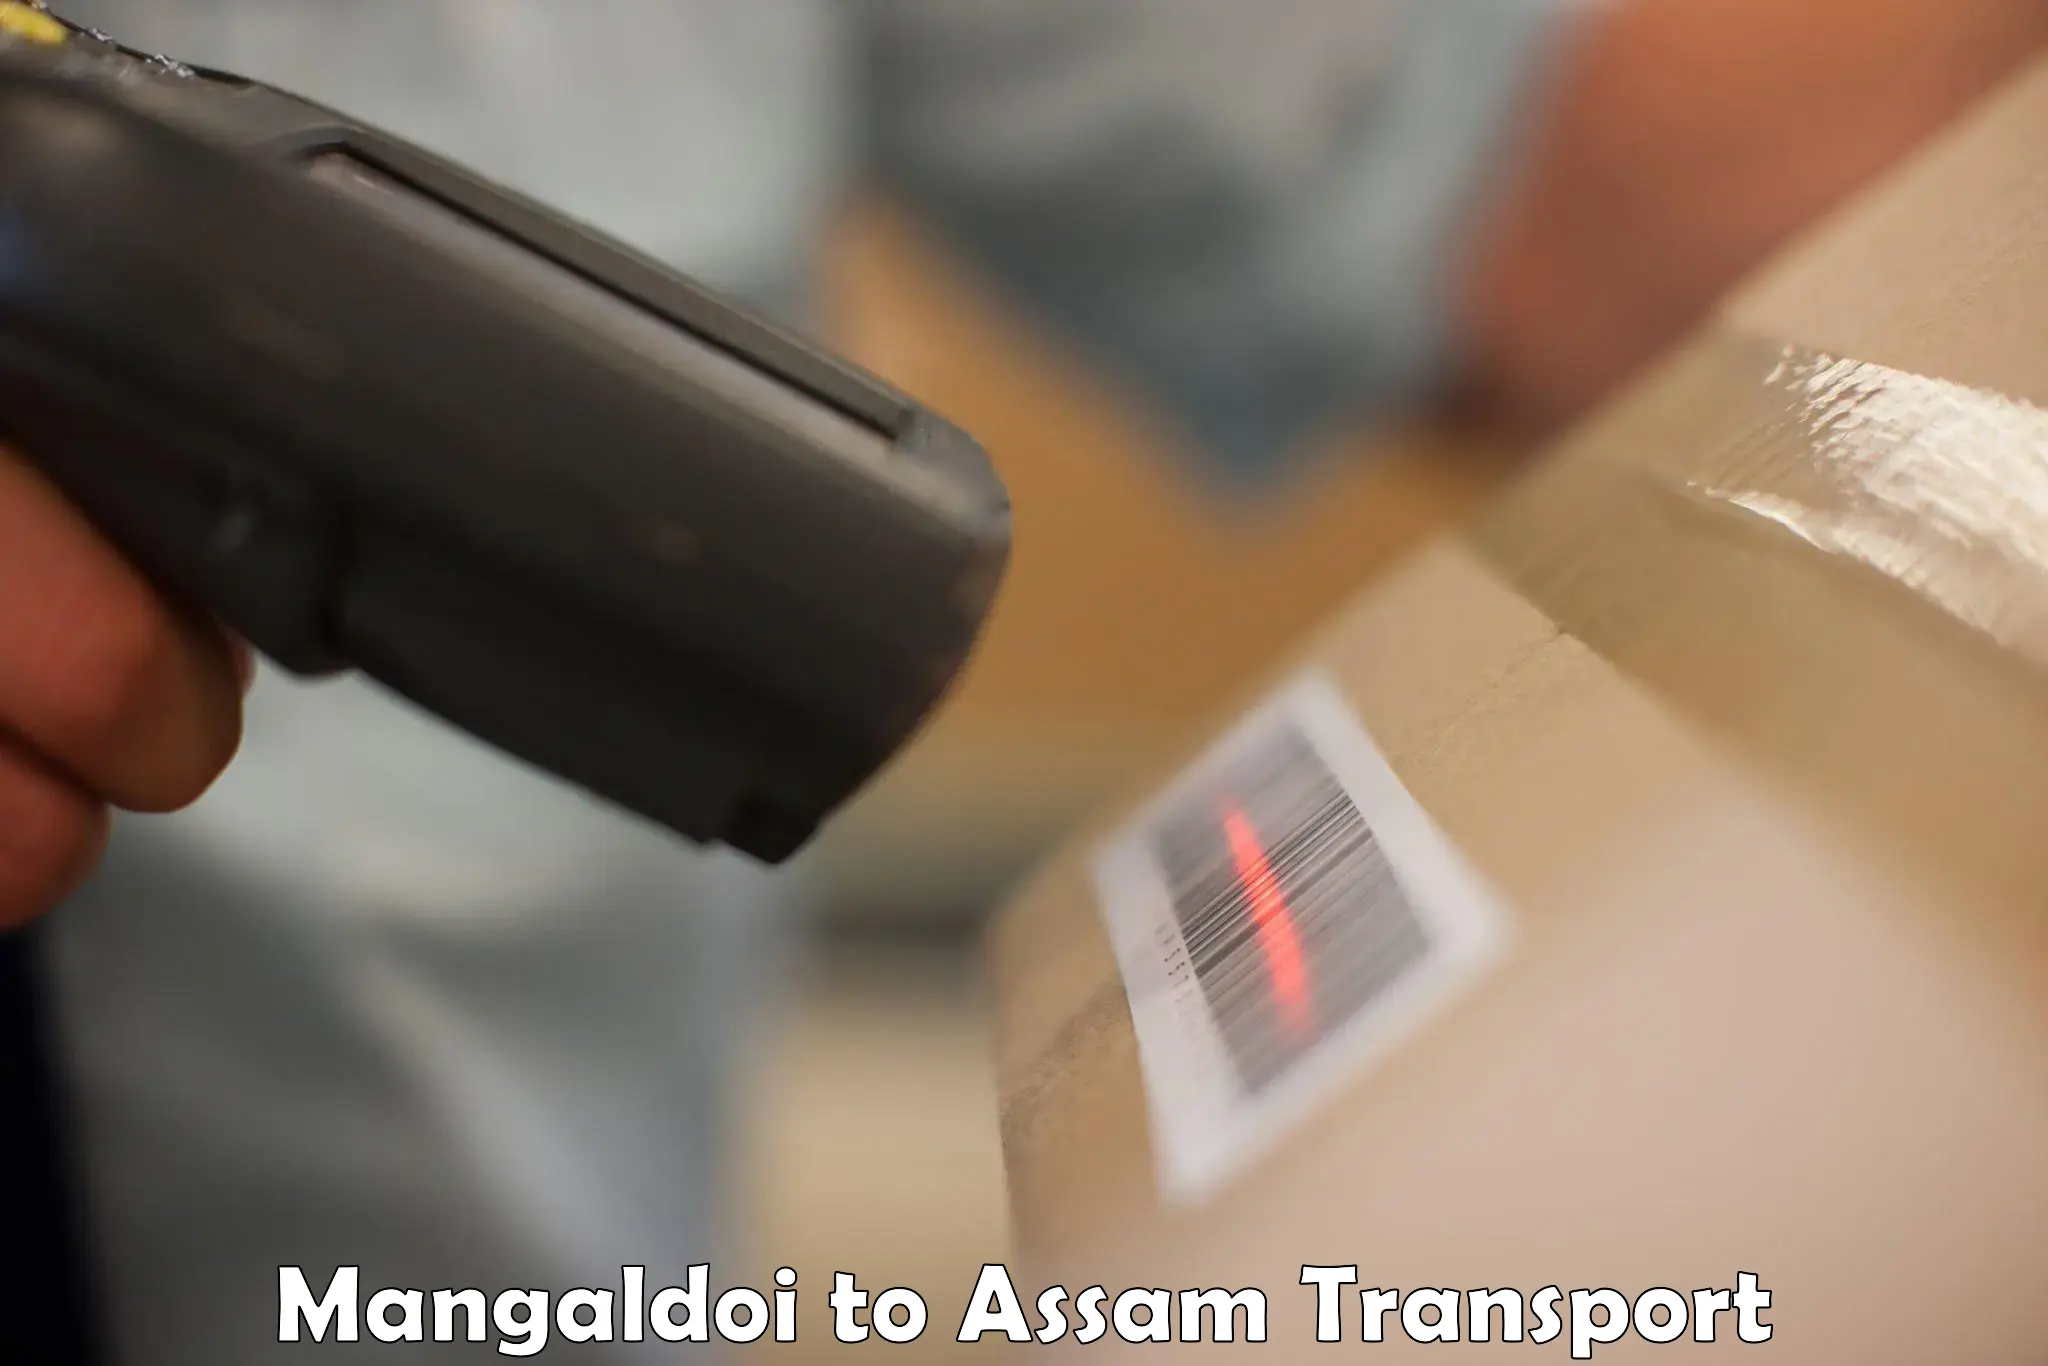 Truck transport companies in India Mangaldoi to Assam